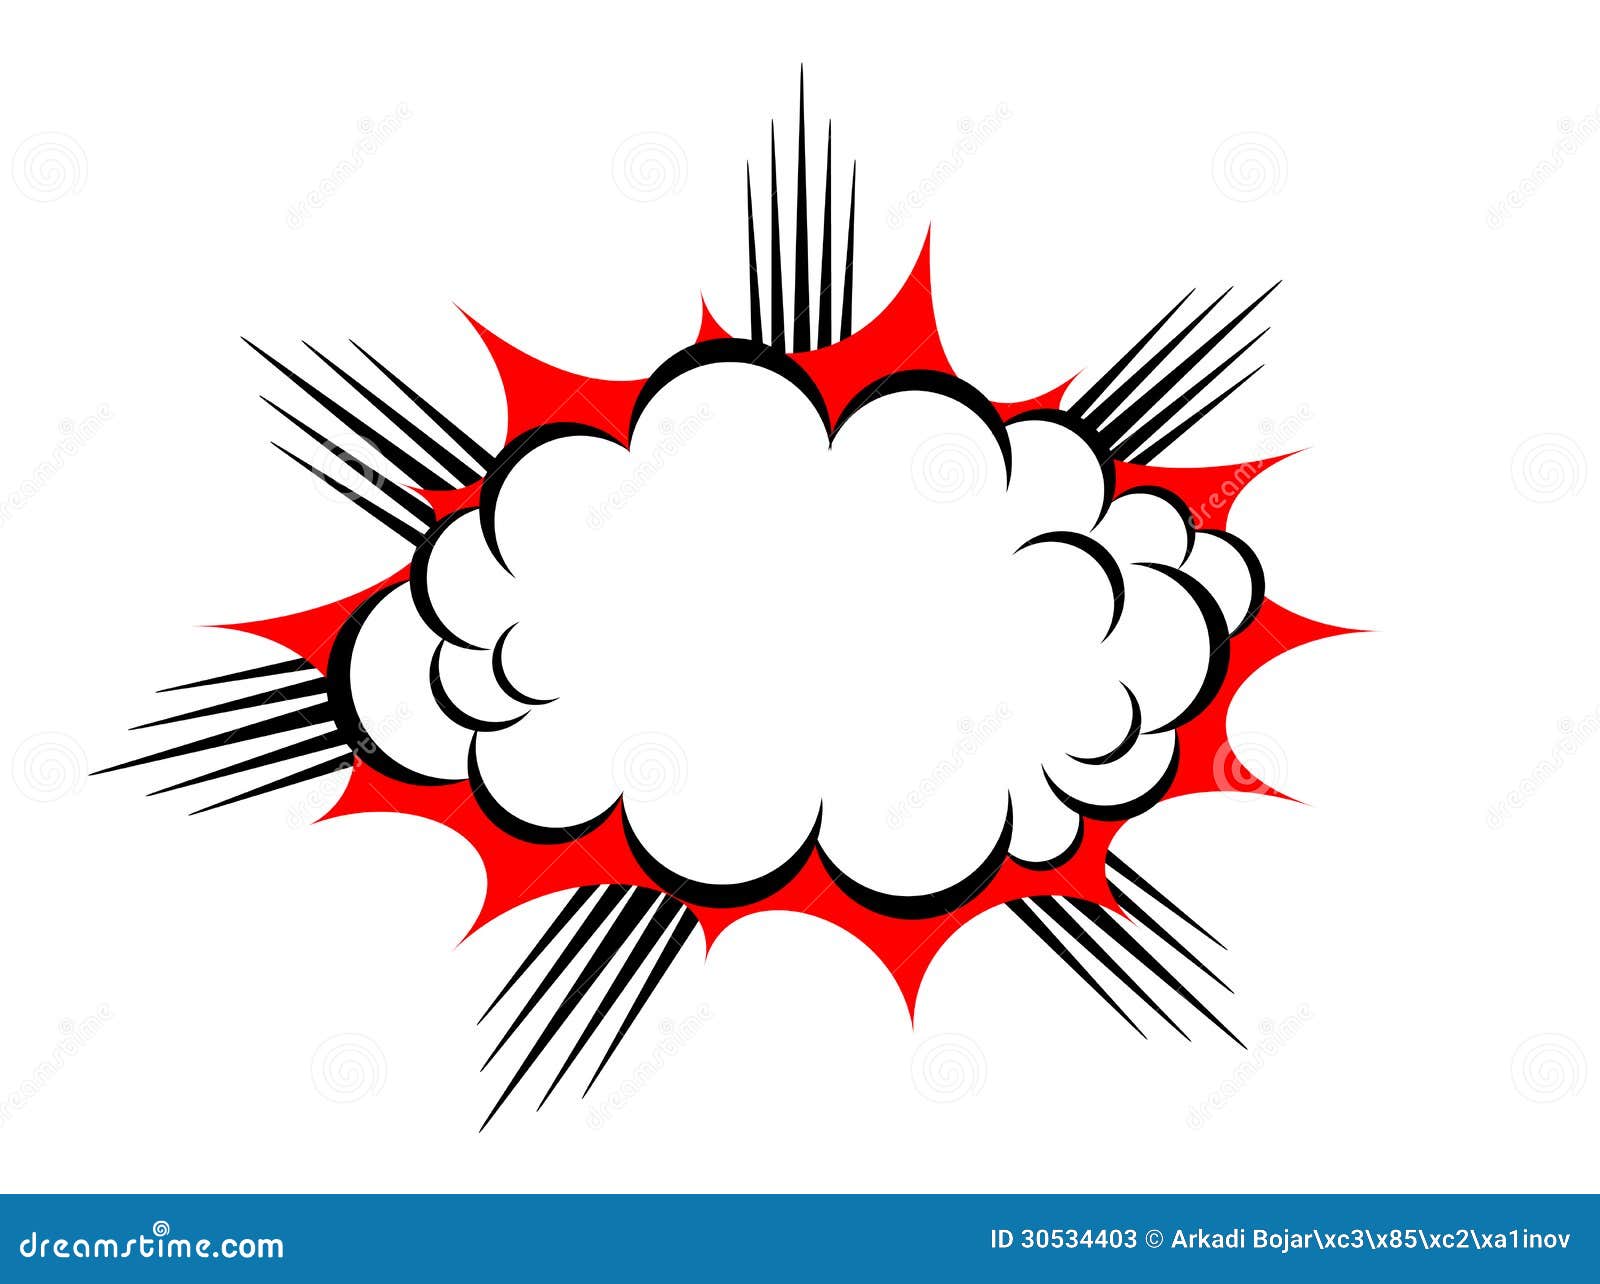 Featured image of post Vetor Nuvem Png Ache e baixe recursos gr tis para nuvem